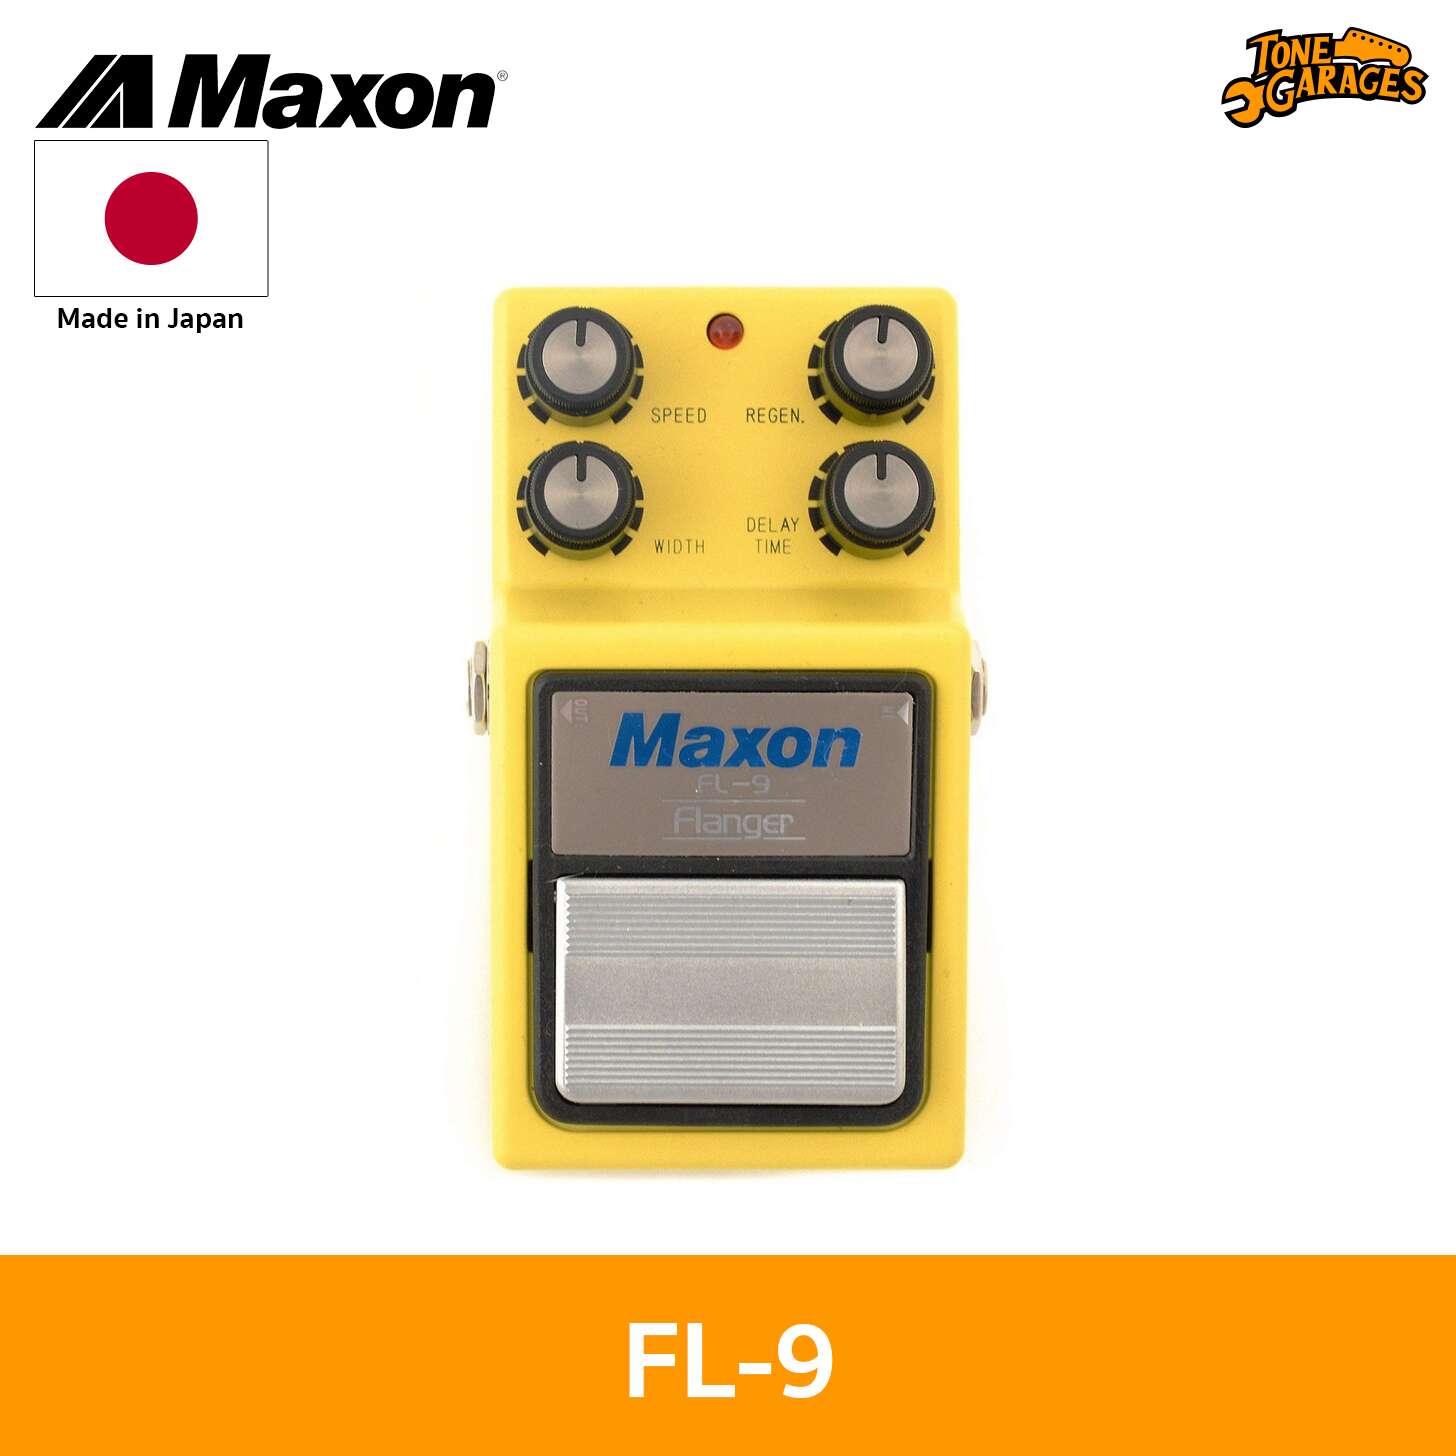 Maxon fl-9 Flanger